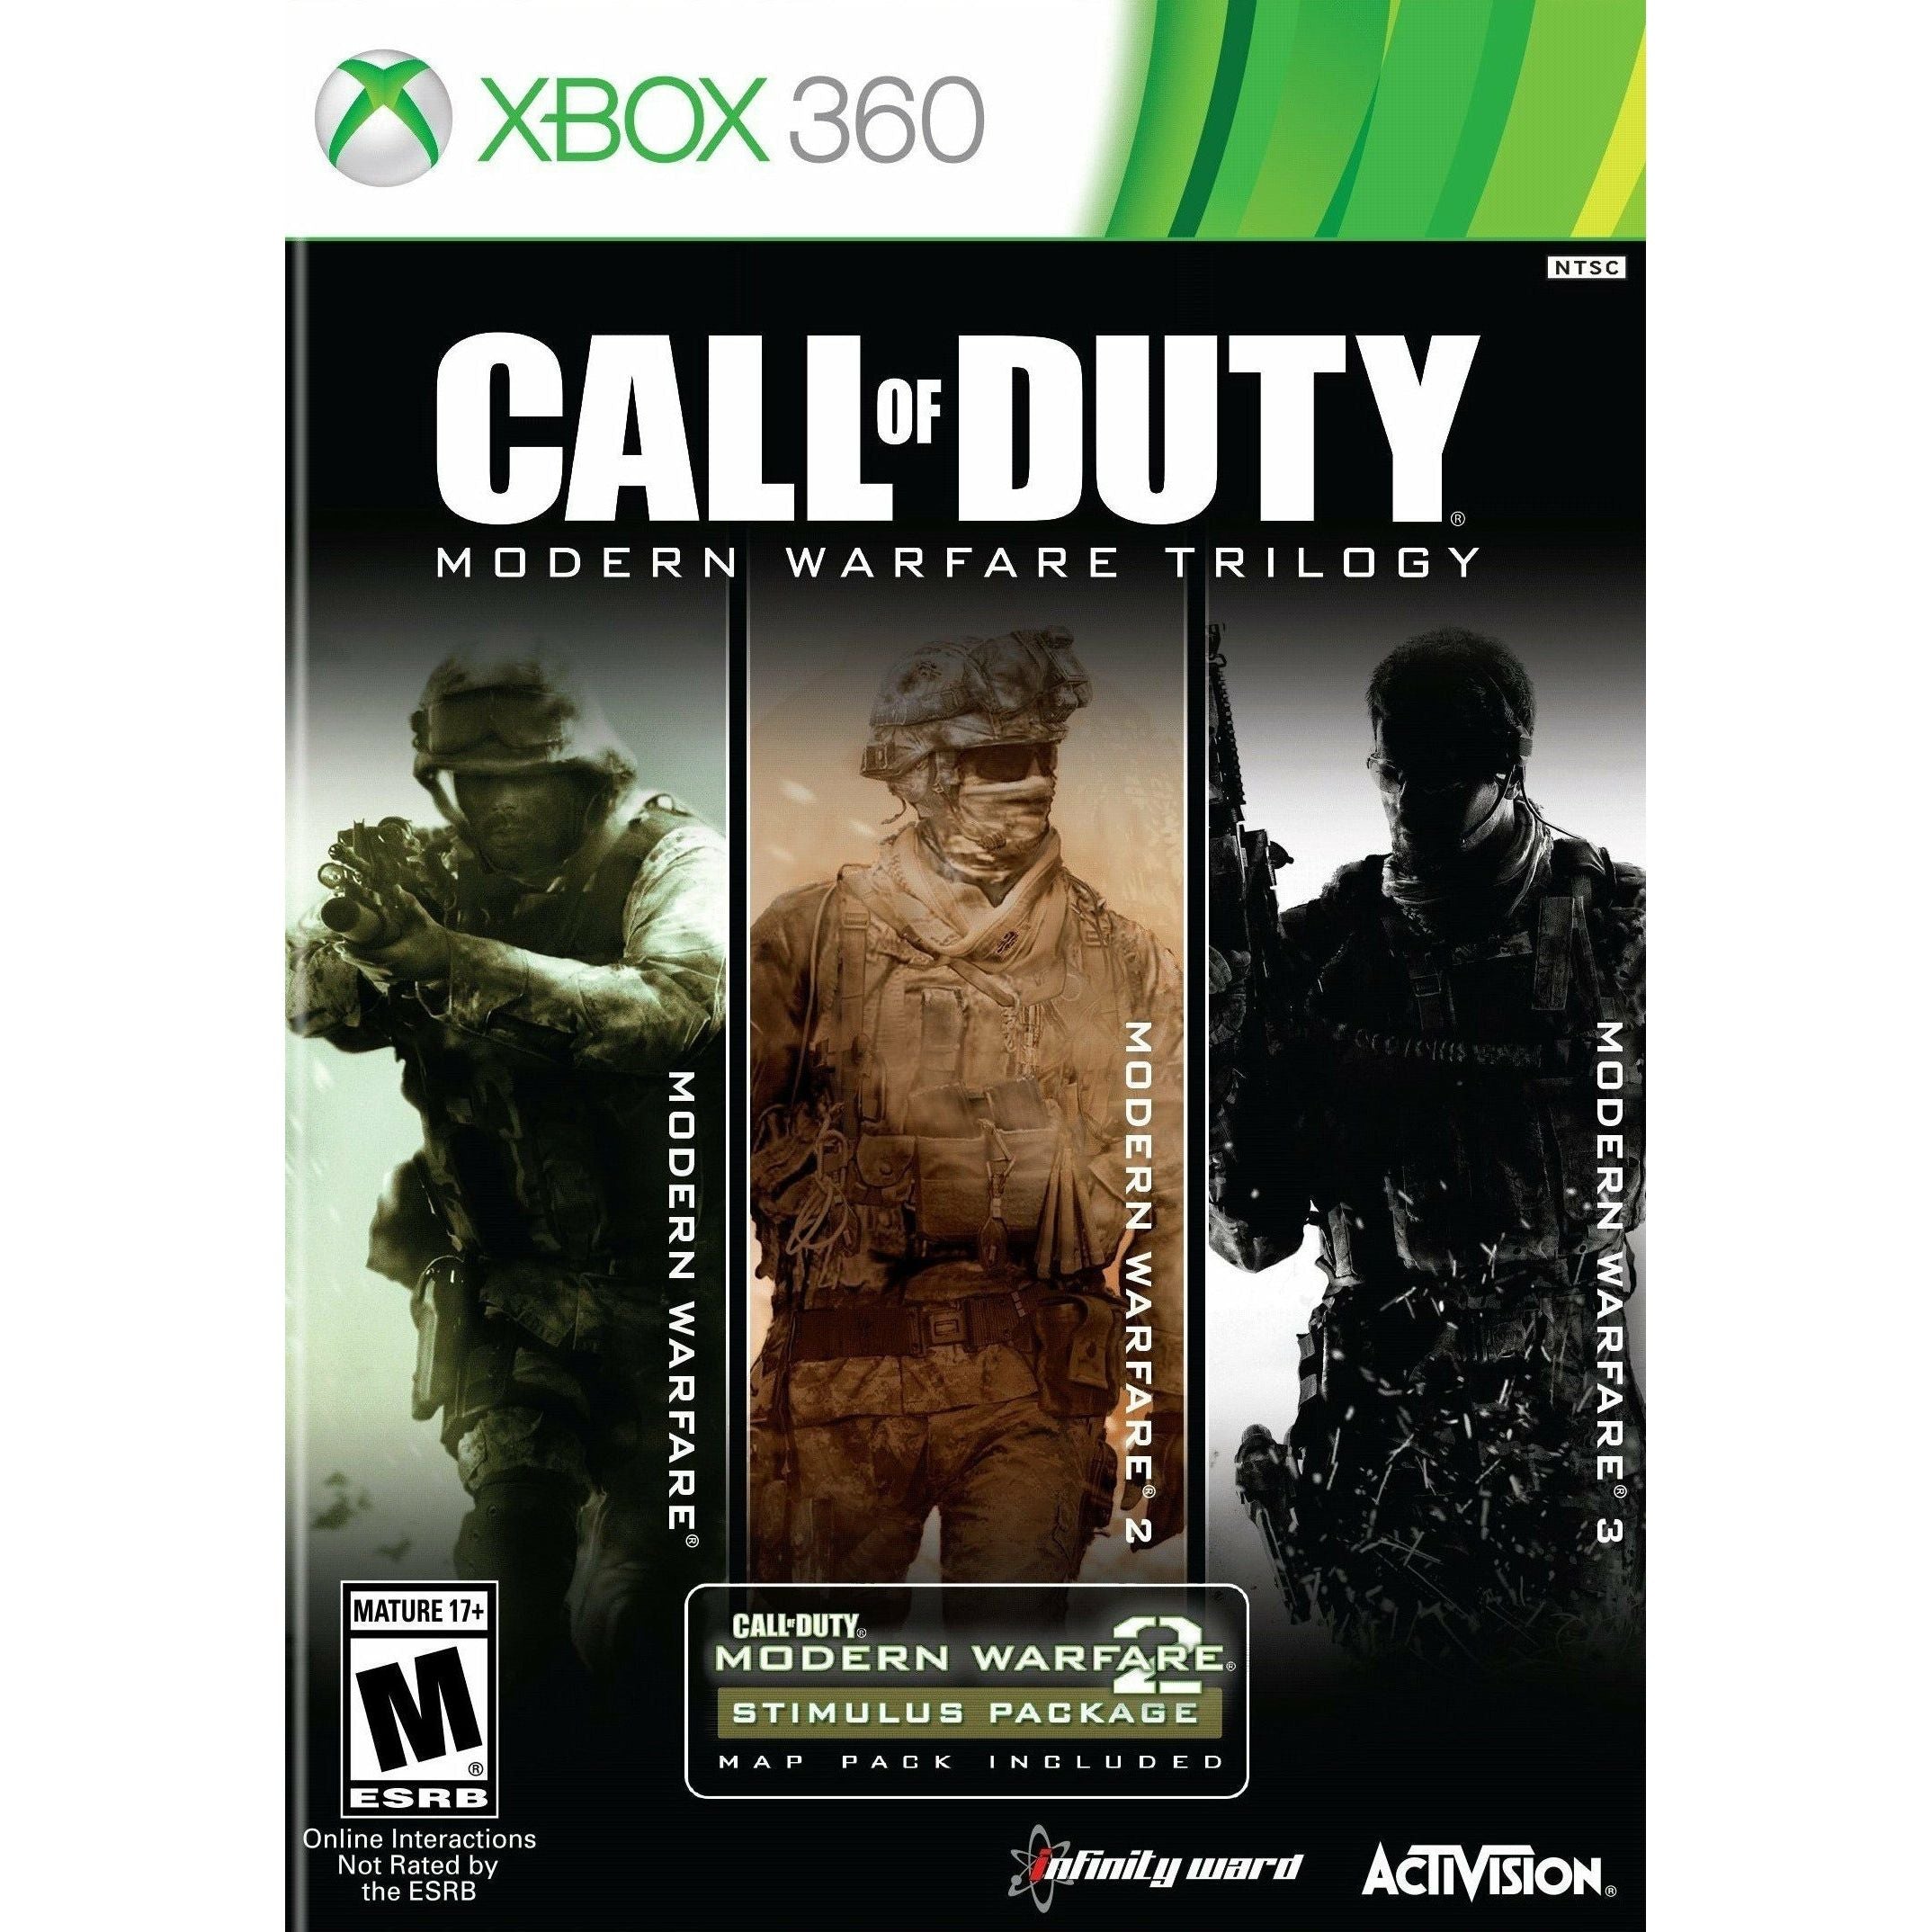 XBOX 360 - Call of Duty Modern Warfare Trilogy